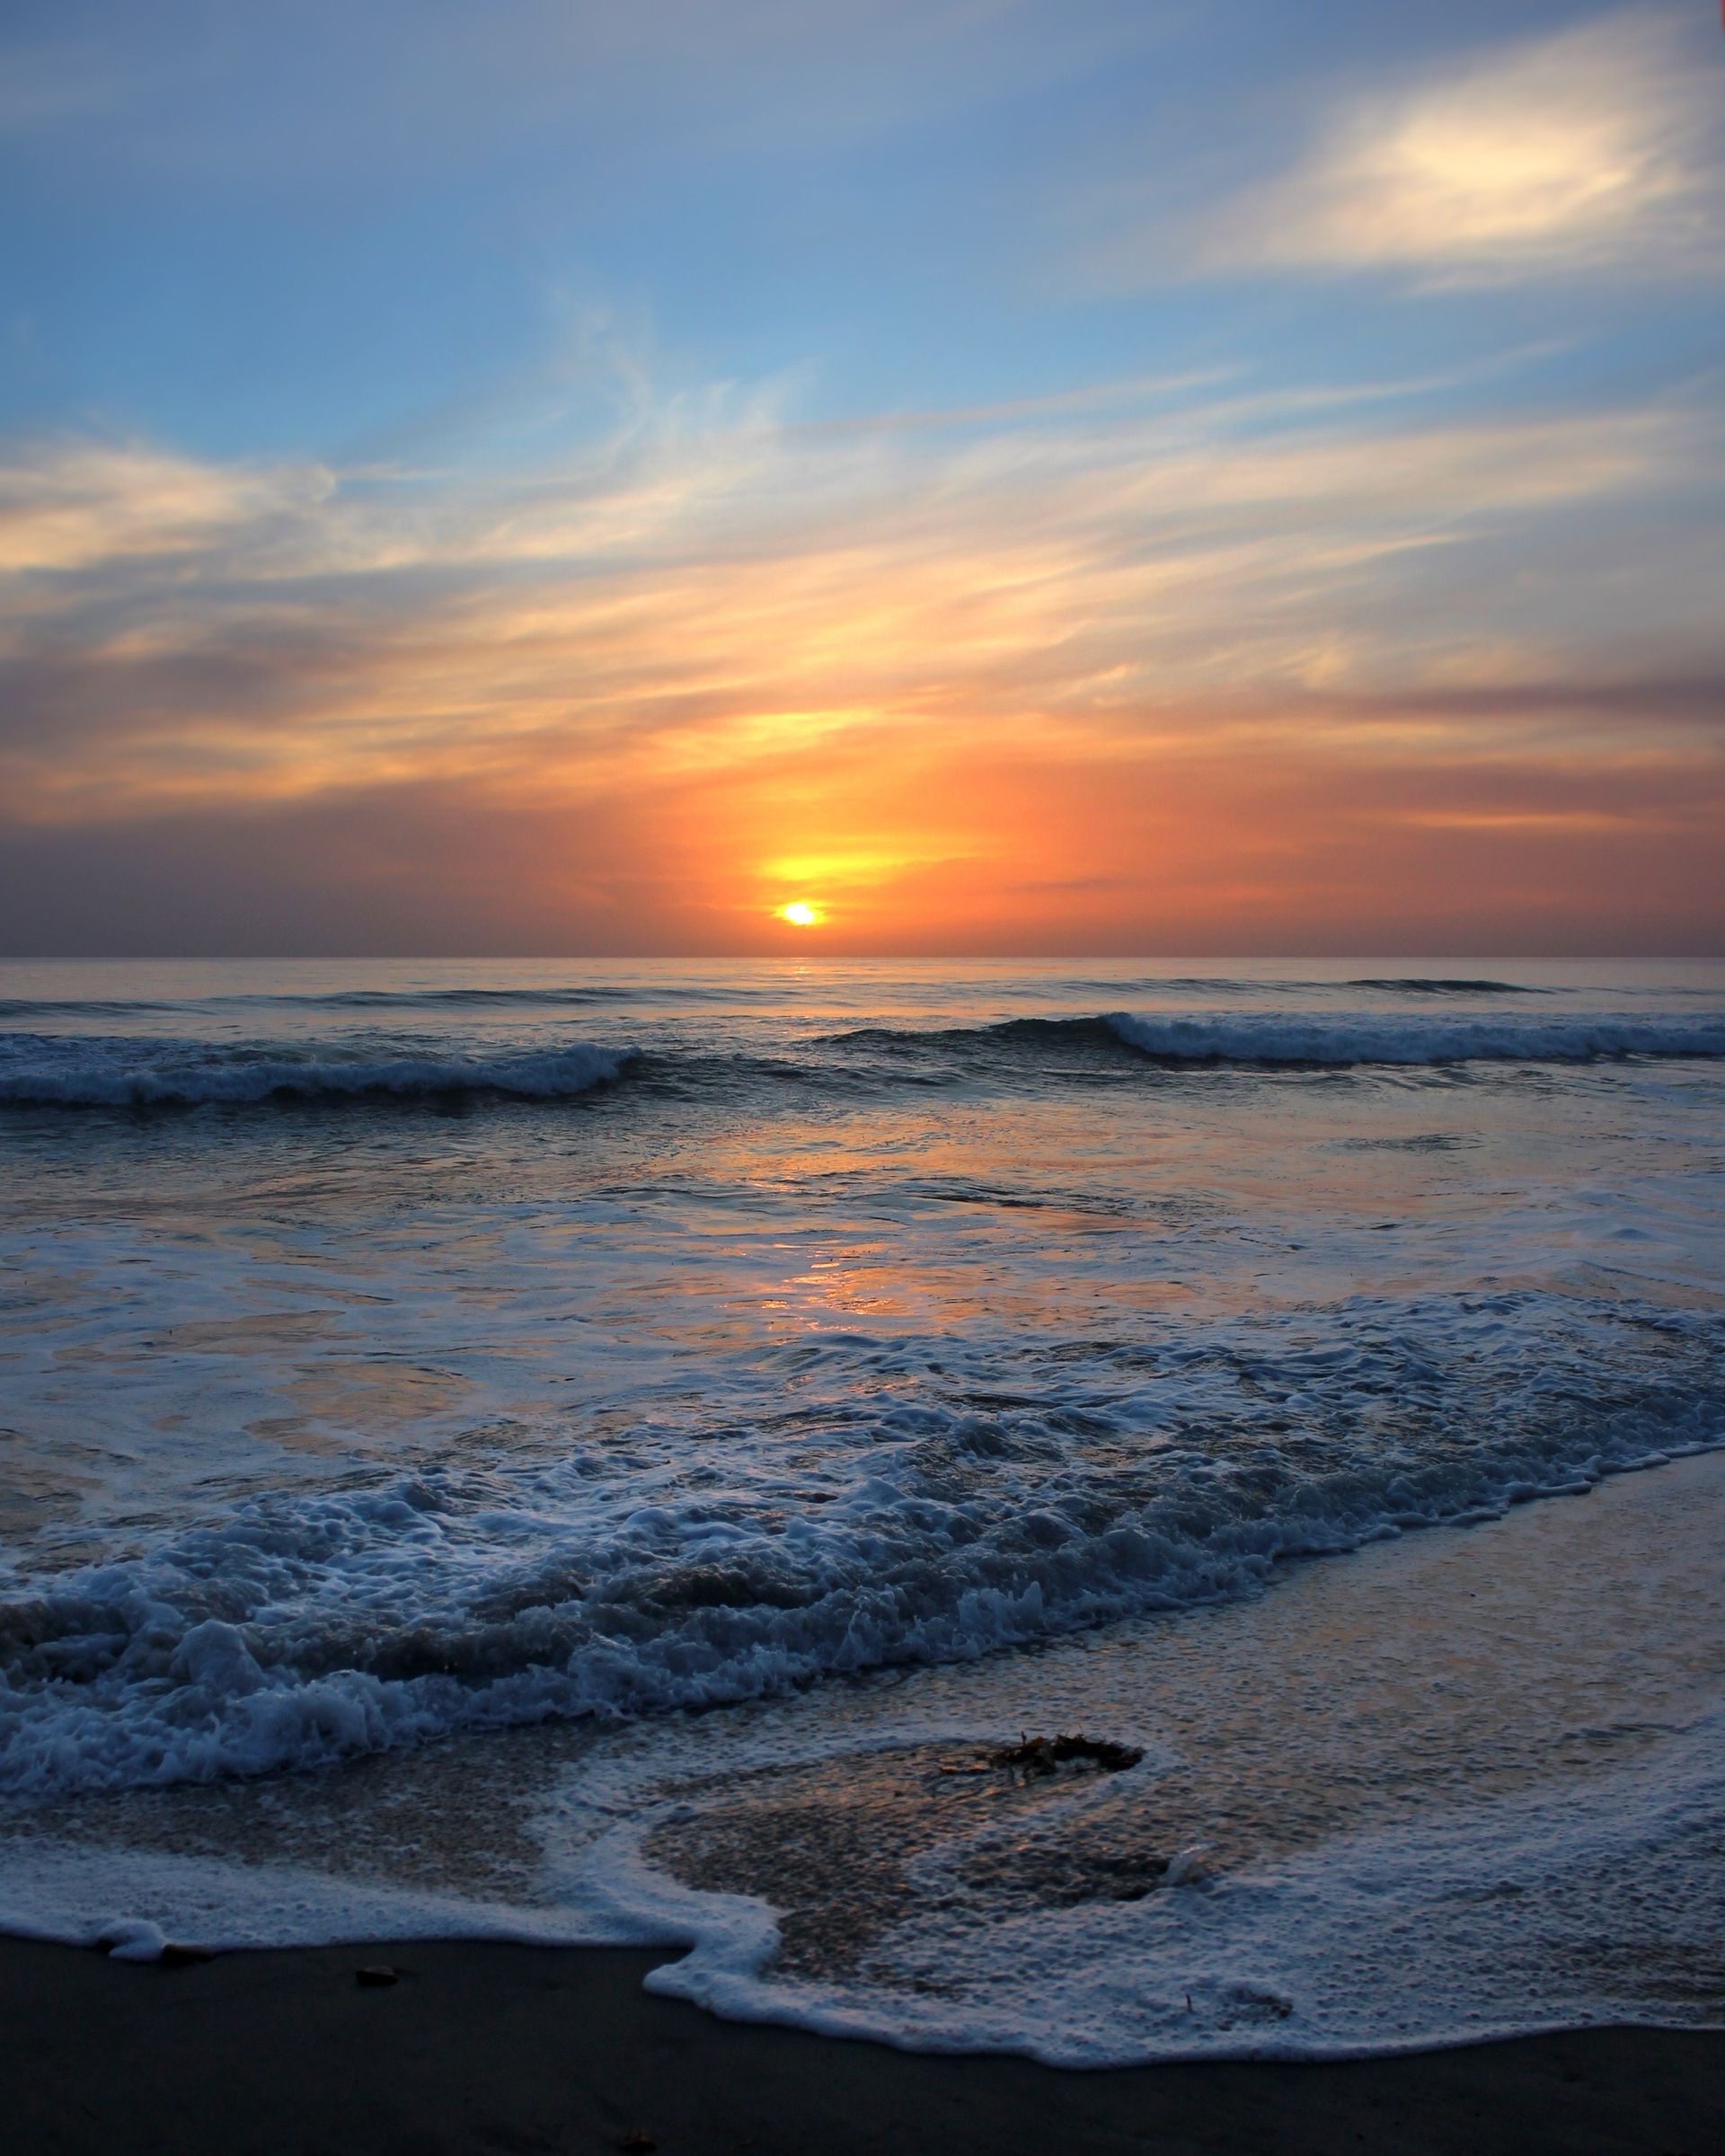 The sun sets over waves crashing on a beach.